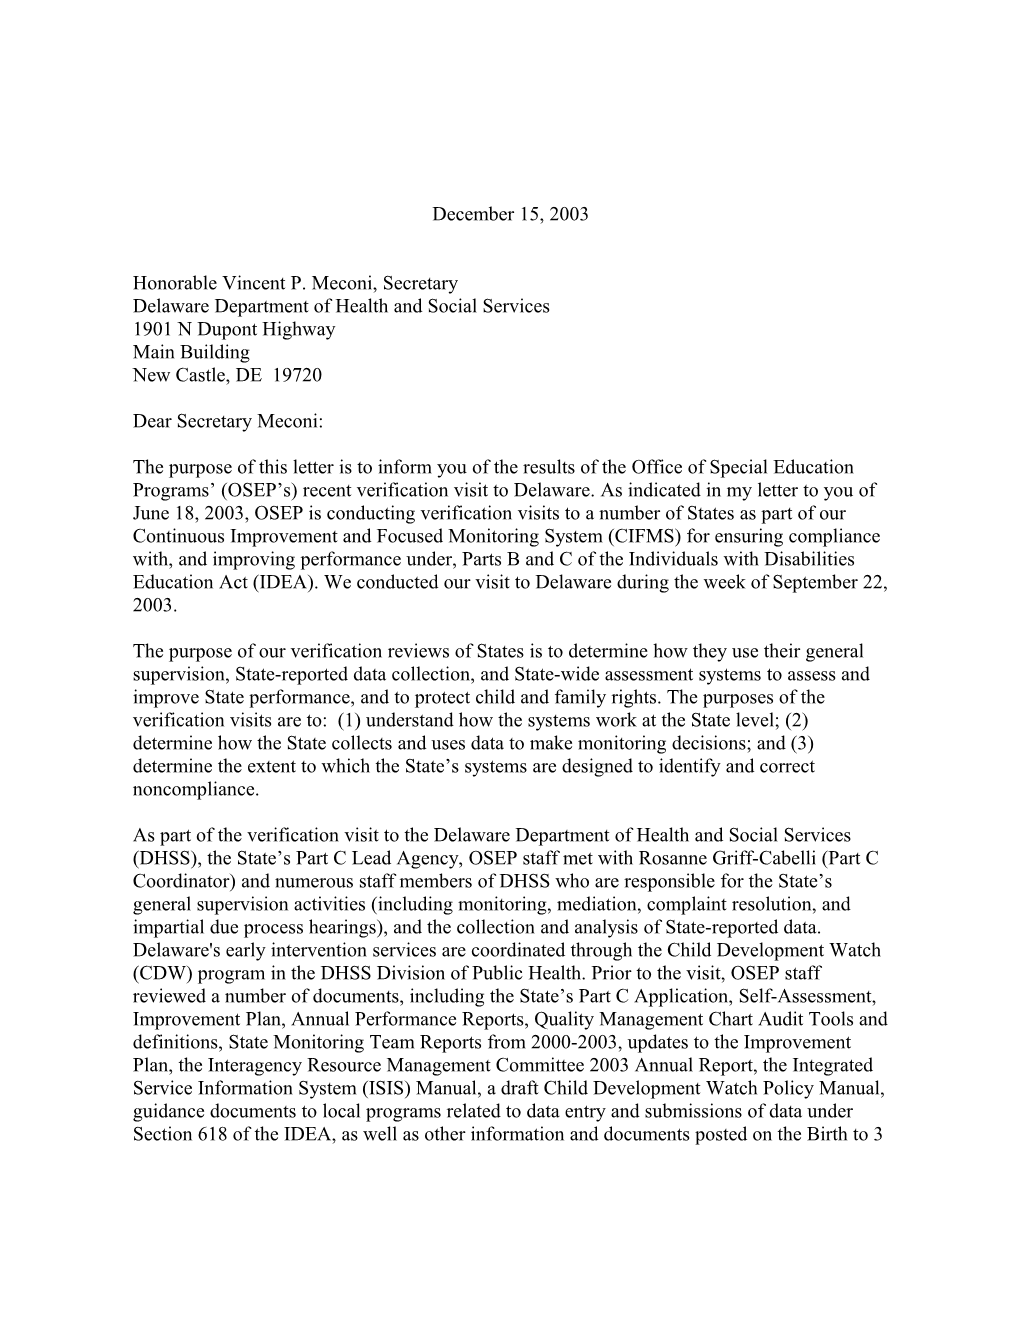 Delaware Part C Verification Visit Letter, Dated December 15, 2003 (MS Word)